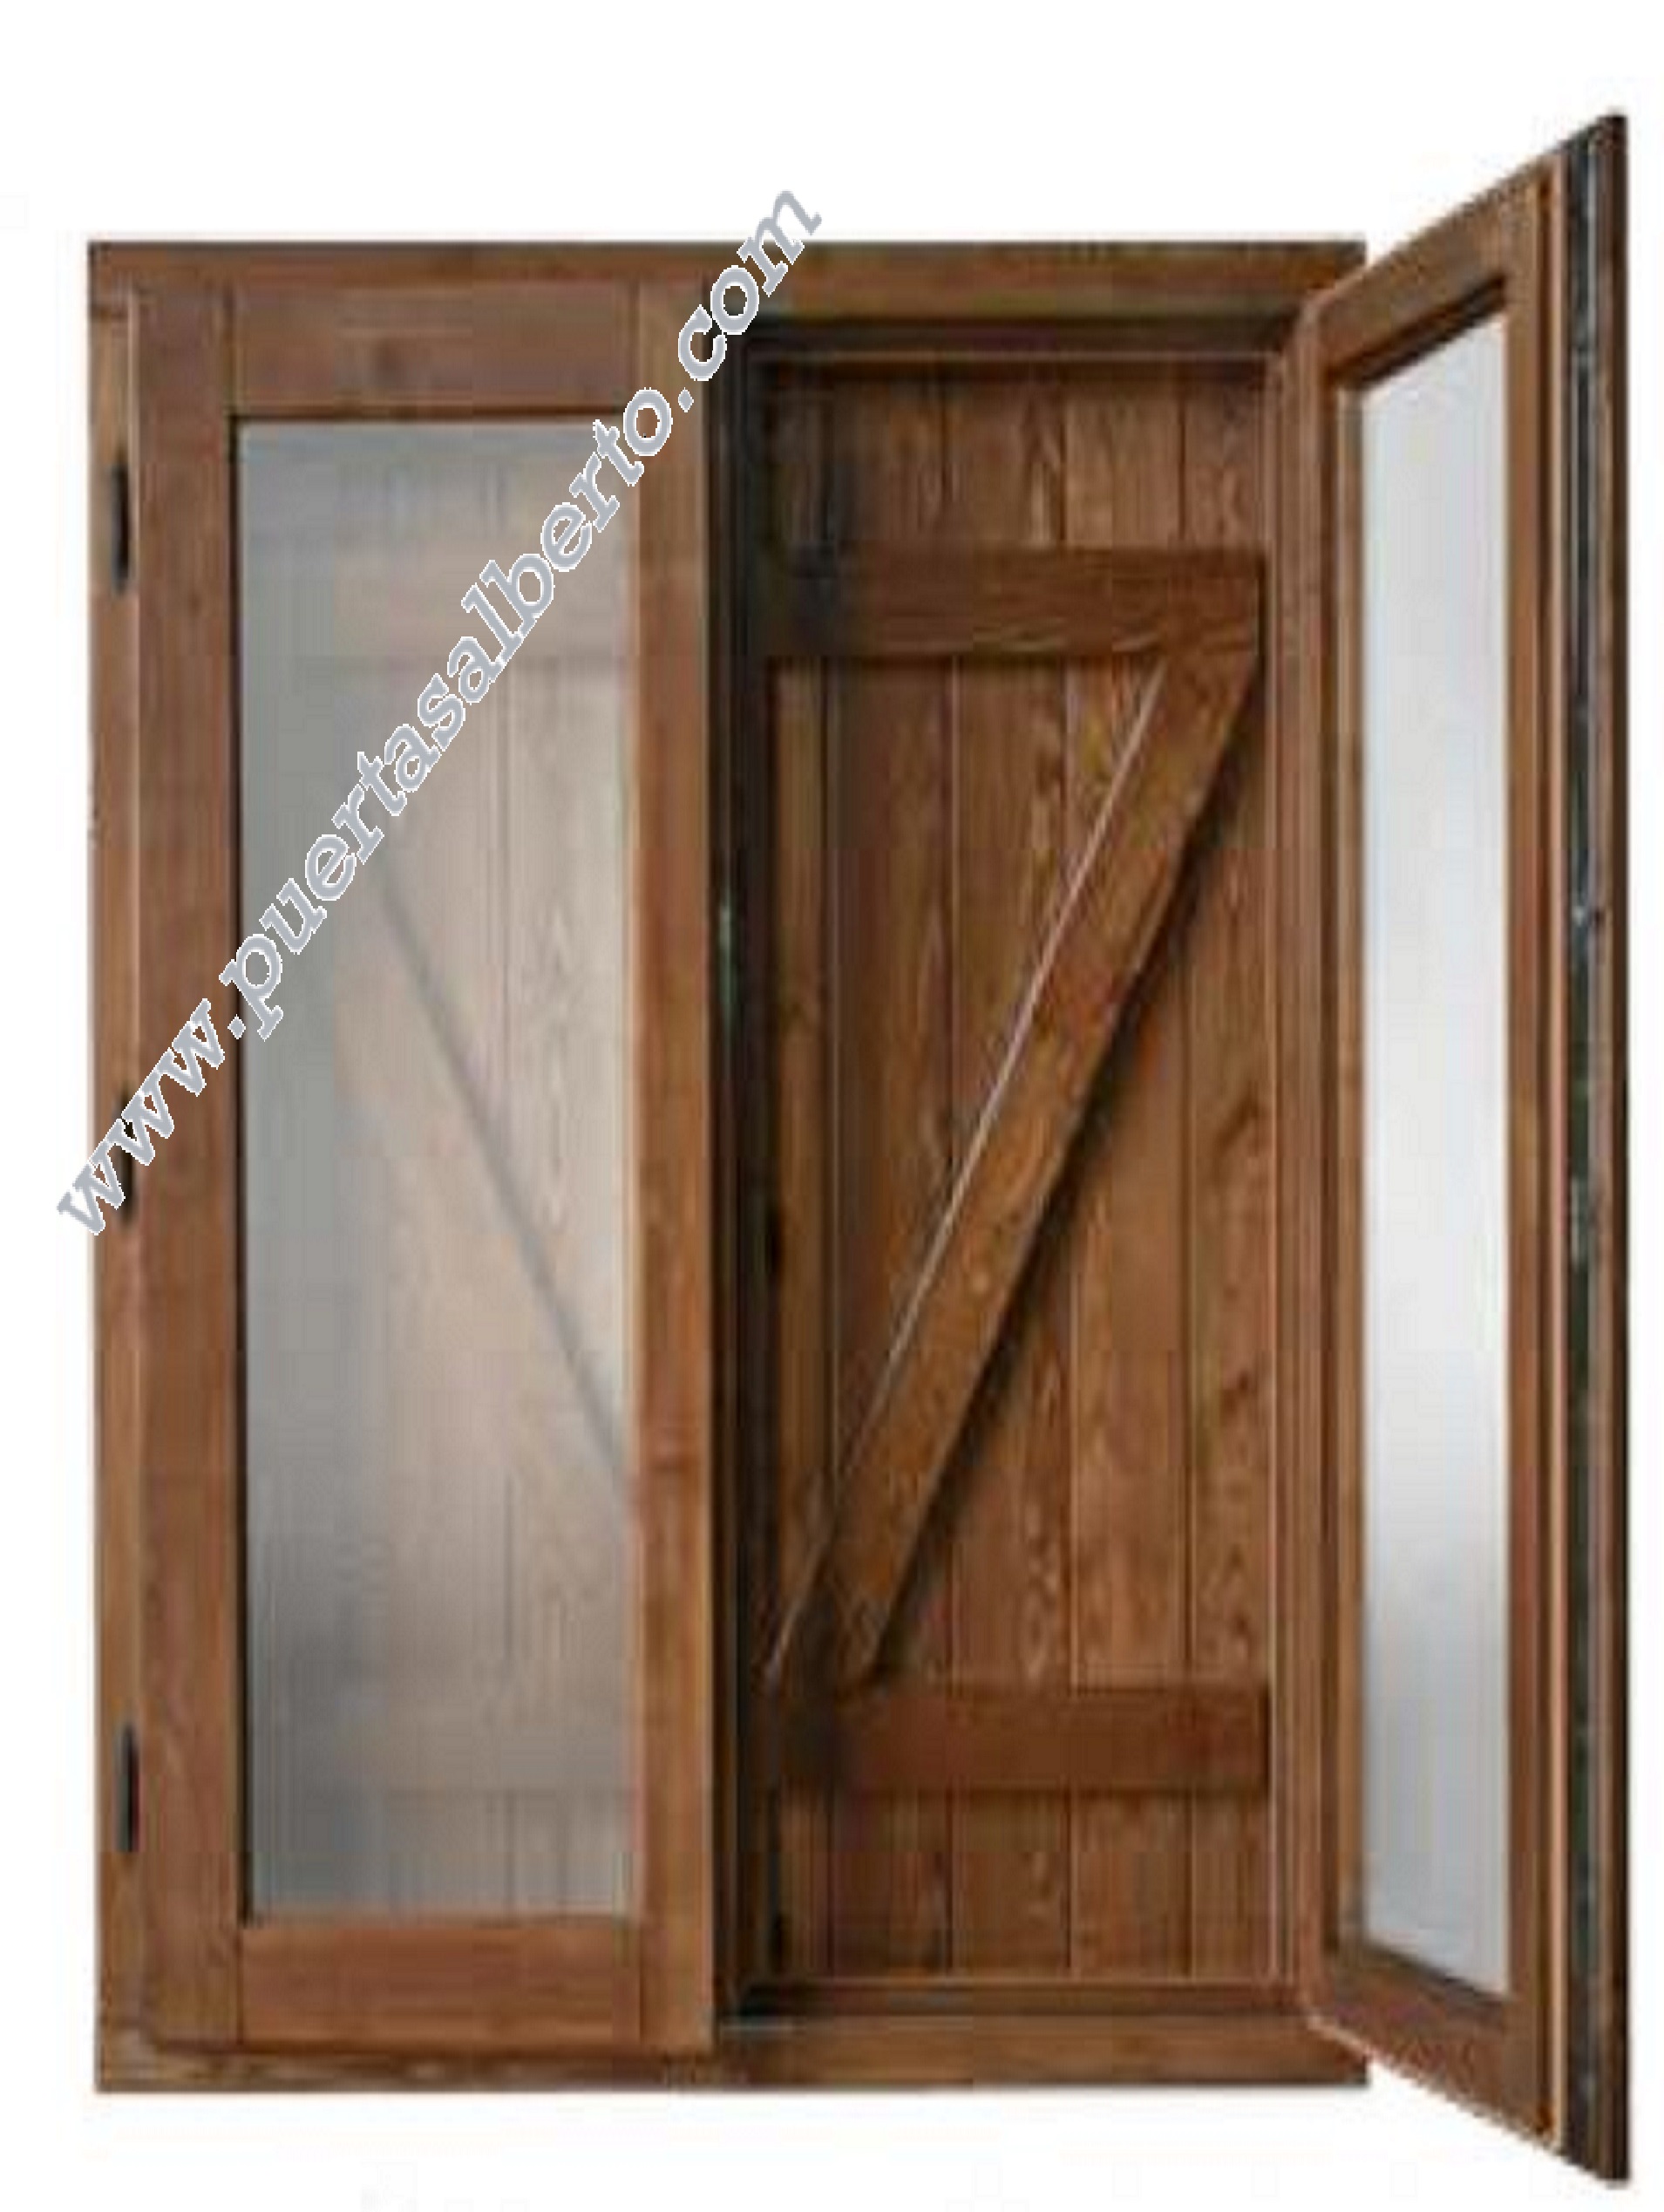 ventana de madera con postigos o contraventanas, verde manzana, vintage